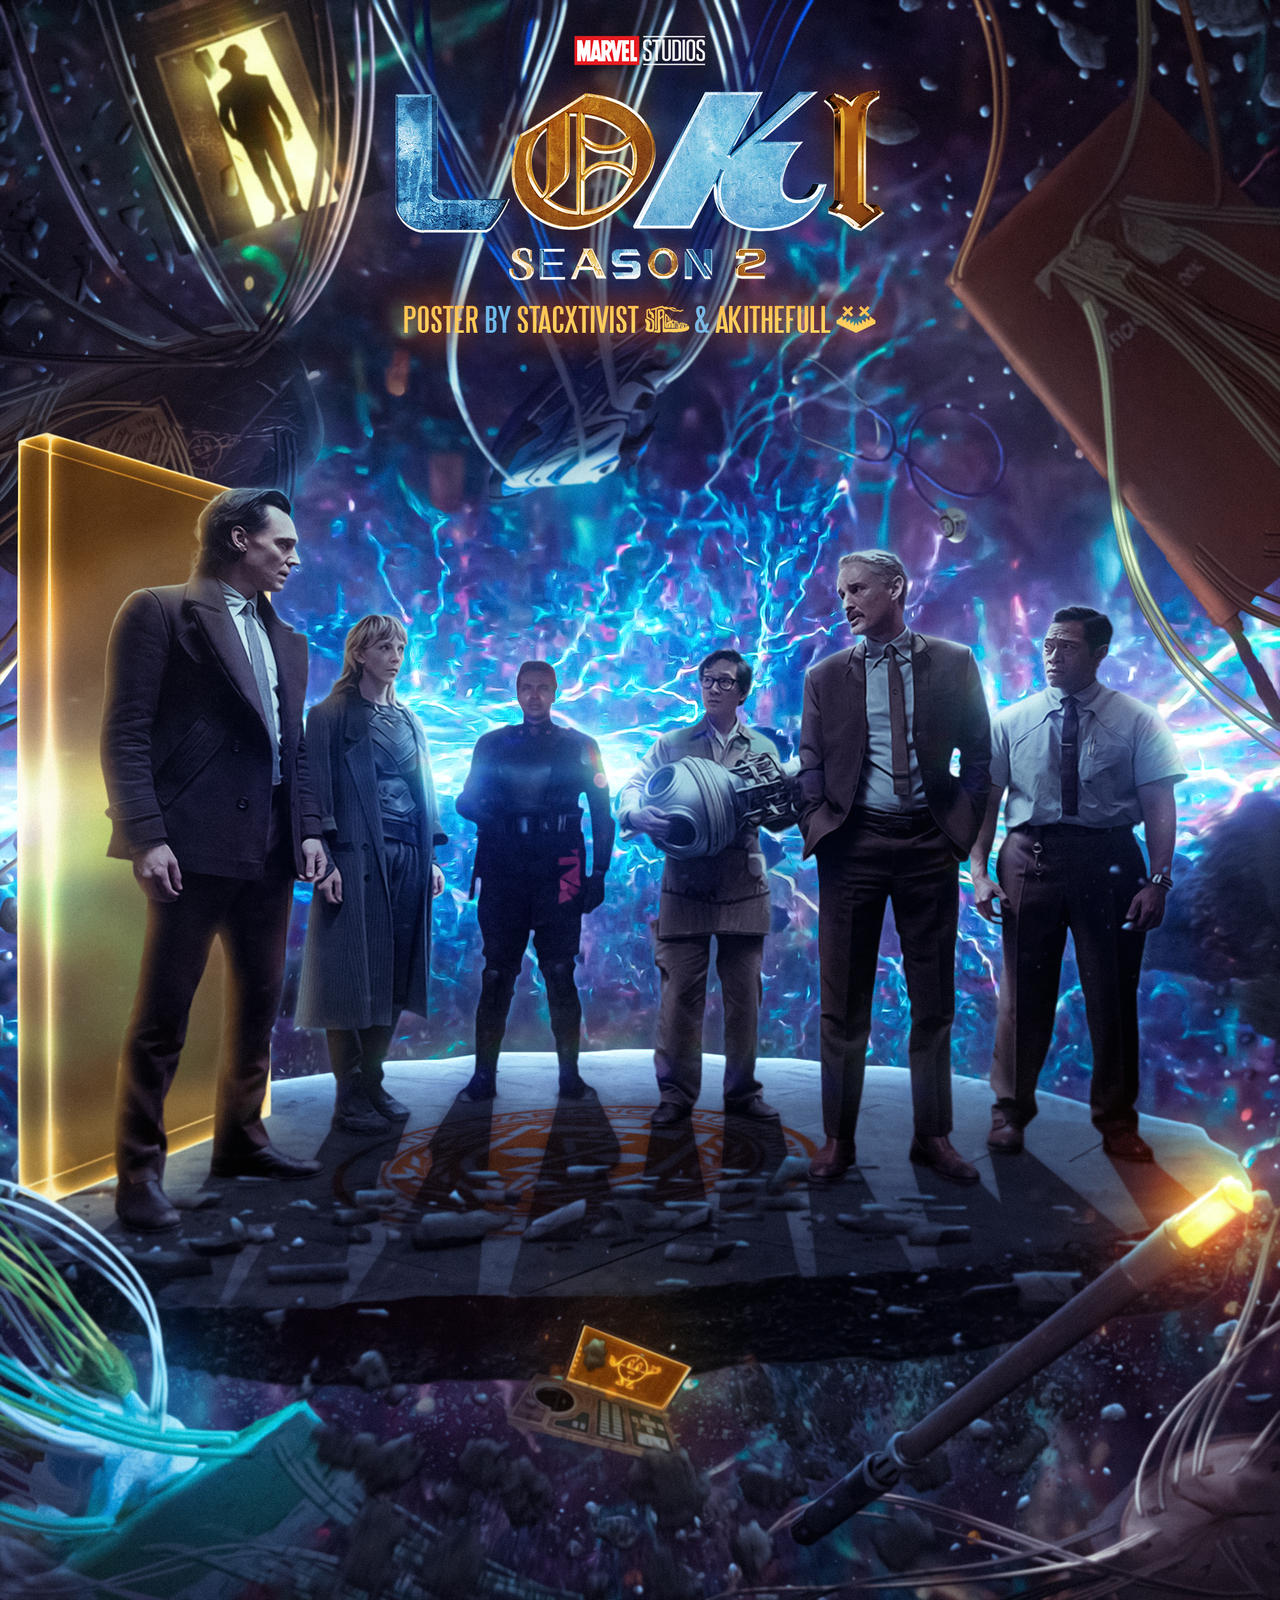 Deadpool 3: Saving Loki Concept Poster by AkiTheFull on DeviantArt